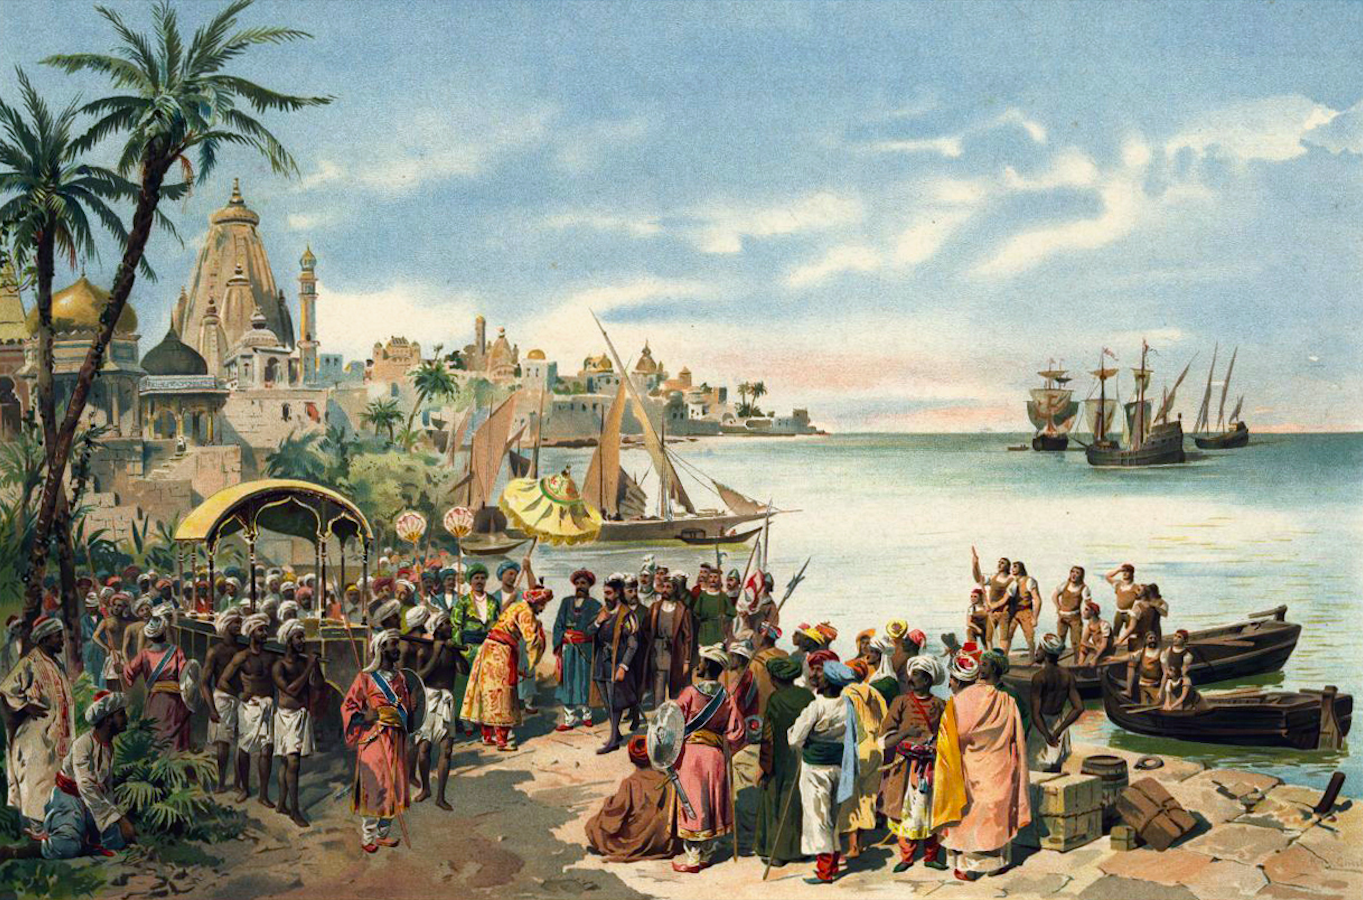 Vasco da Gama Arriving at Calicut, India (Illustration) - World History Encyclopedia